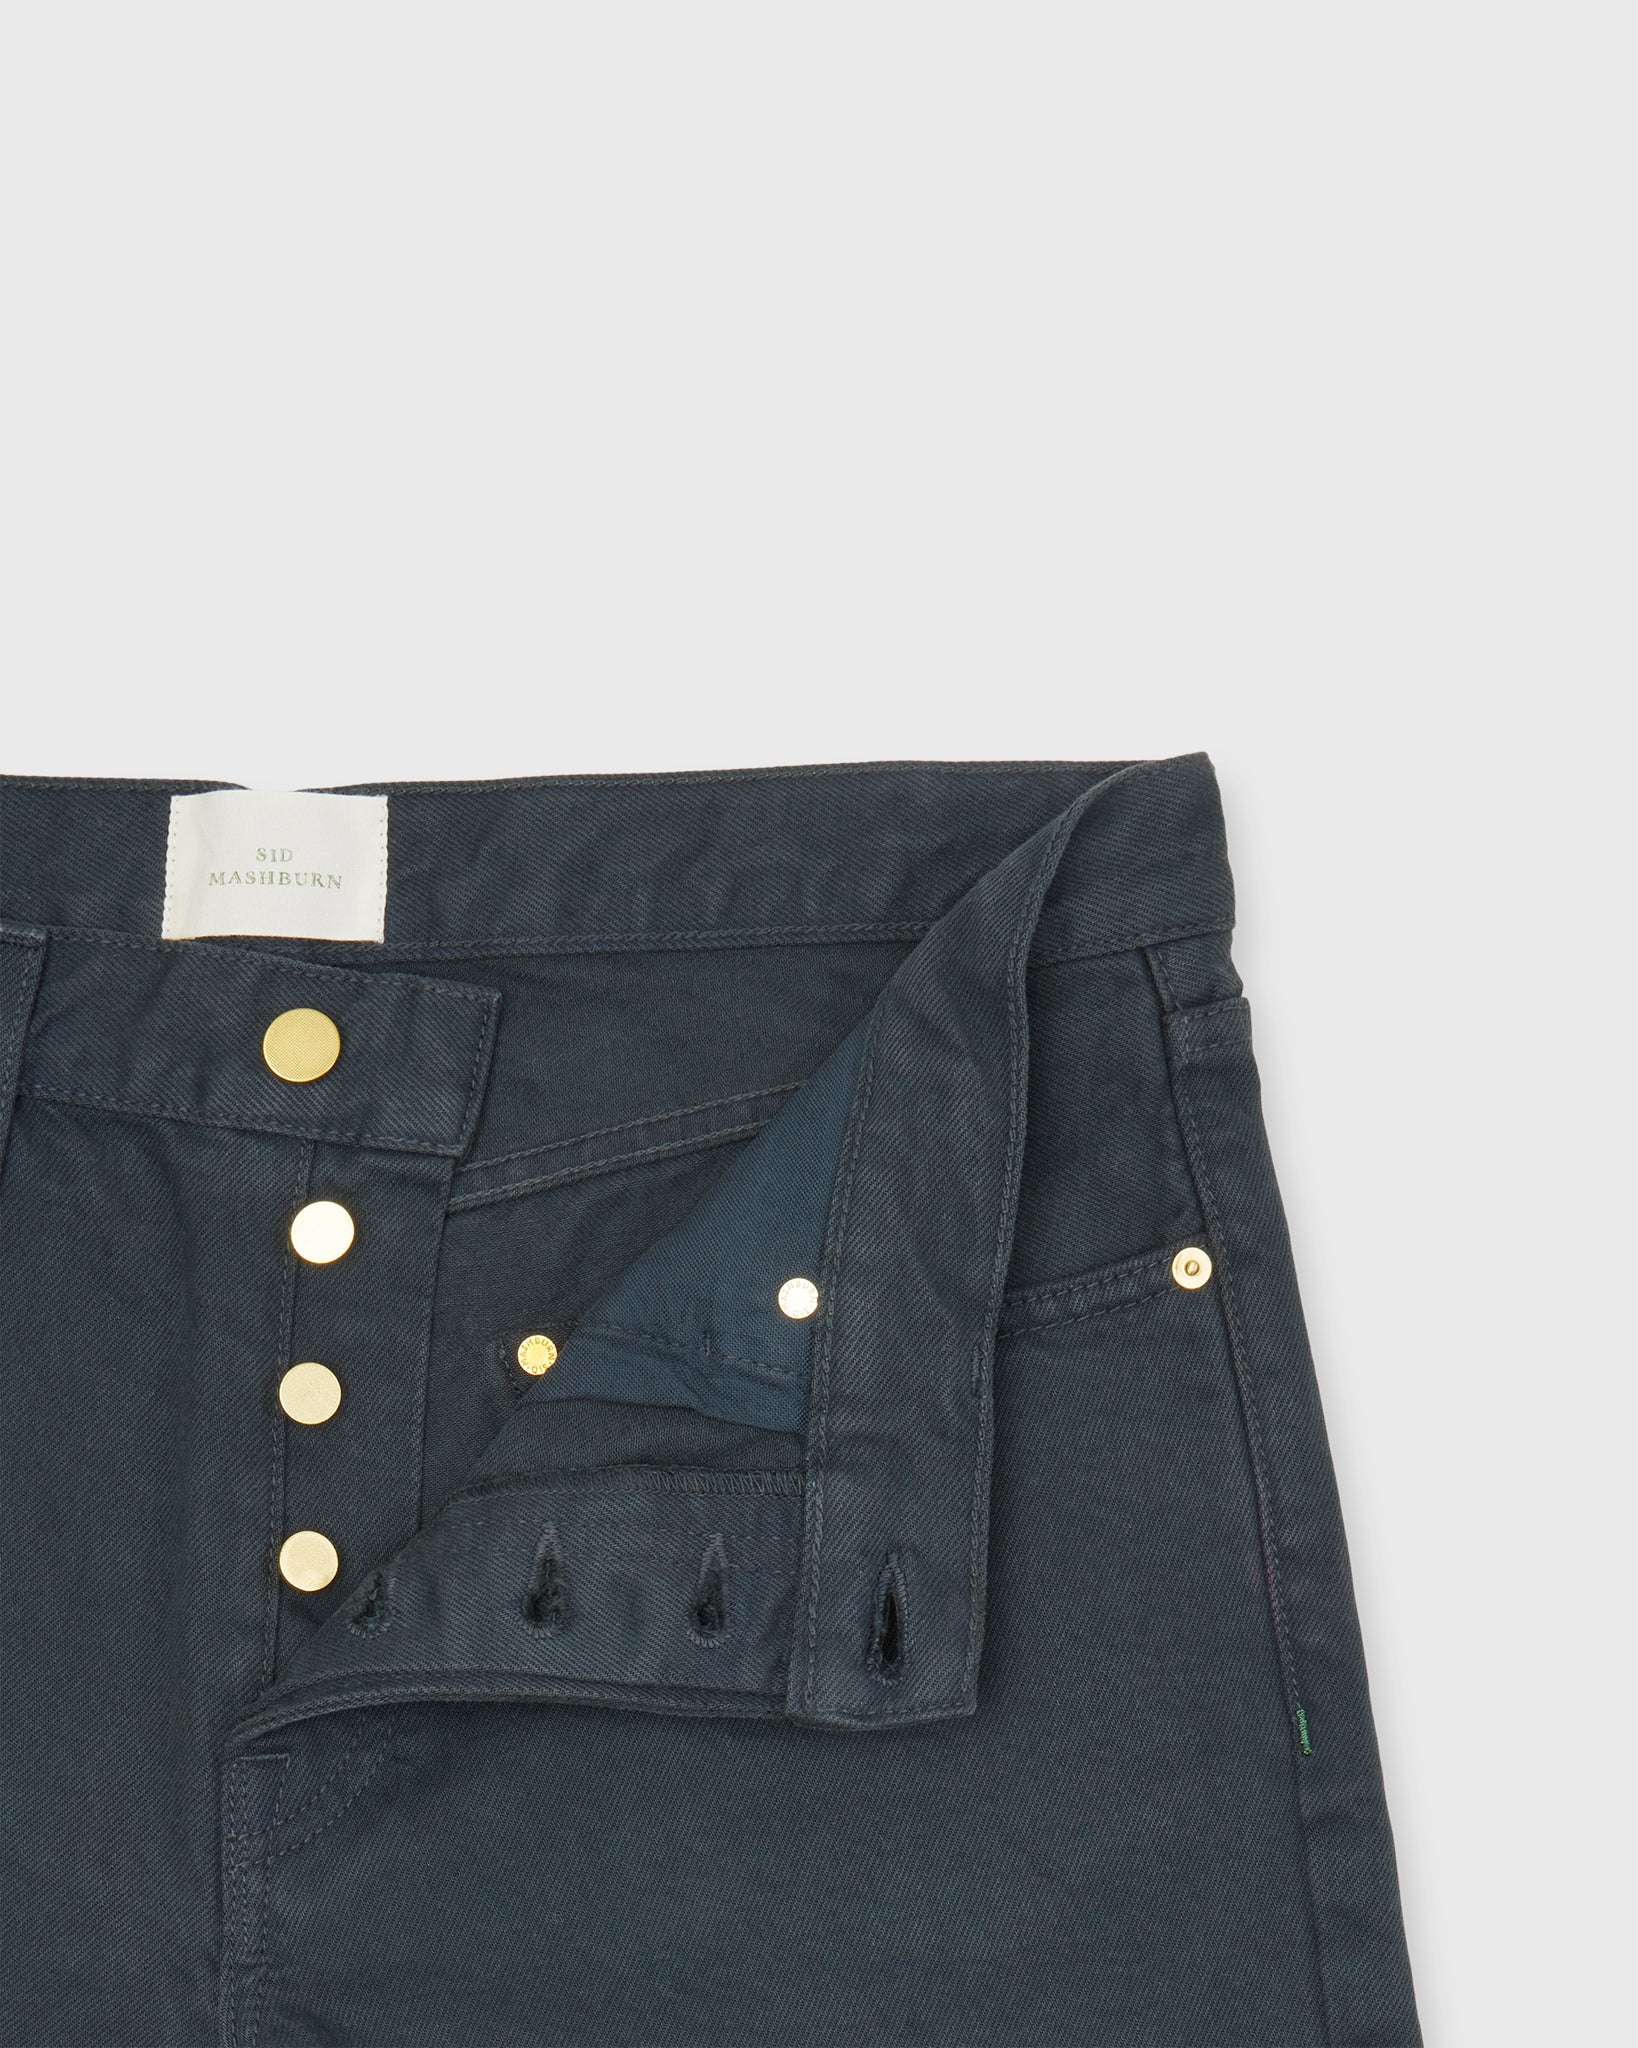 Slim Straight Jean in Coal Garment-Dyed Denim